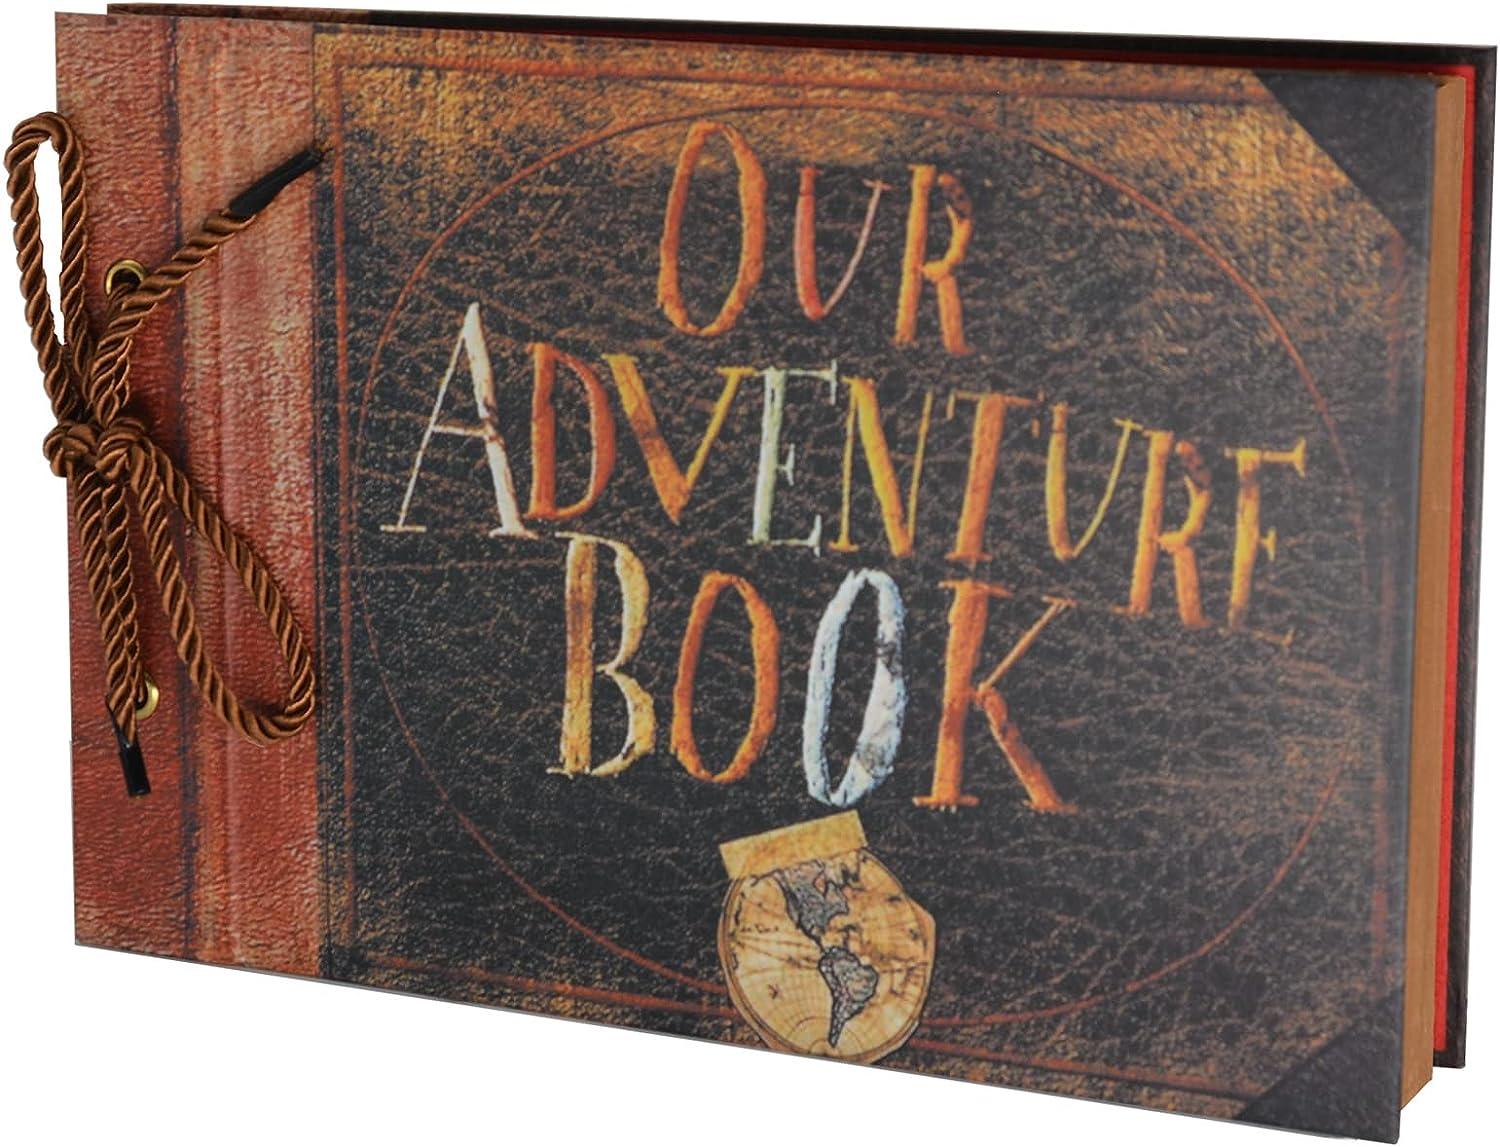 The Adventure [Book]